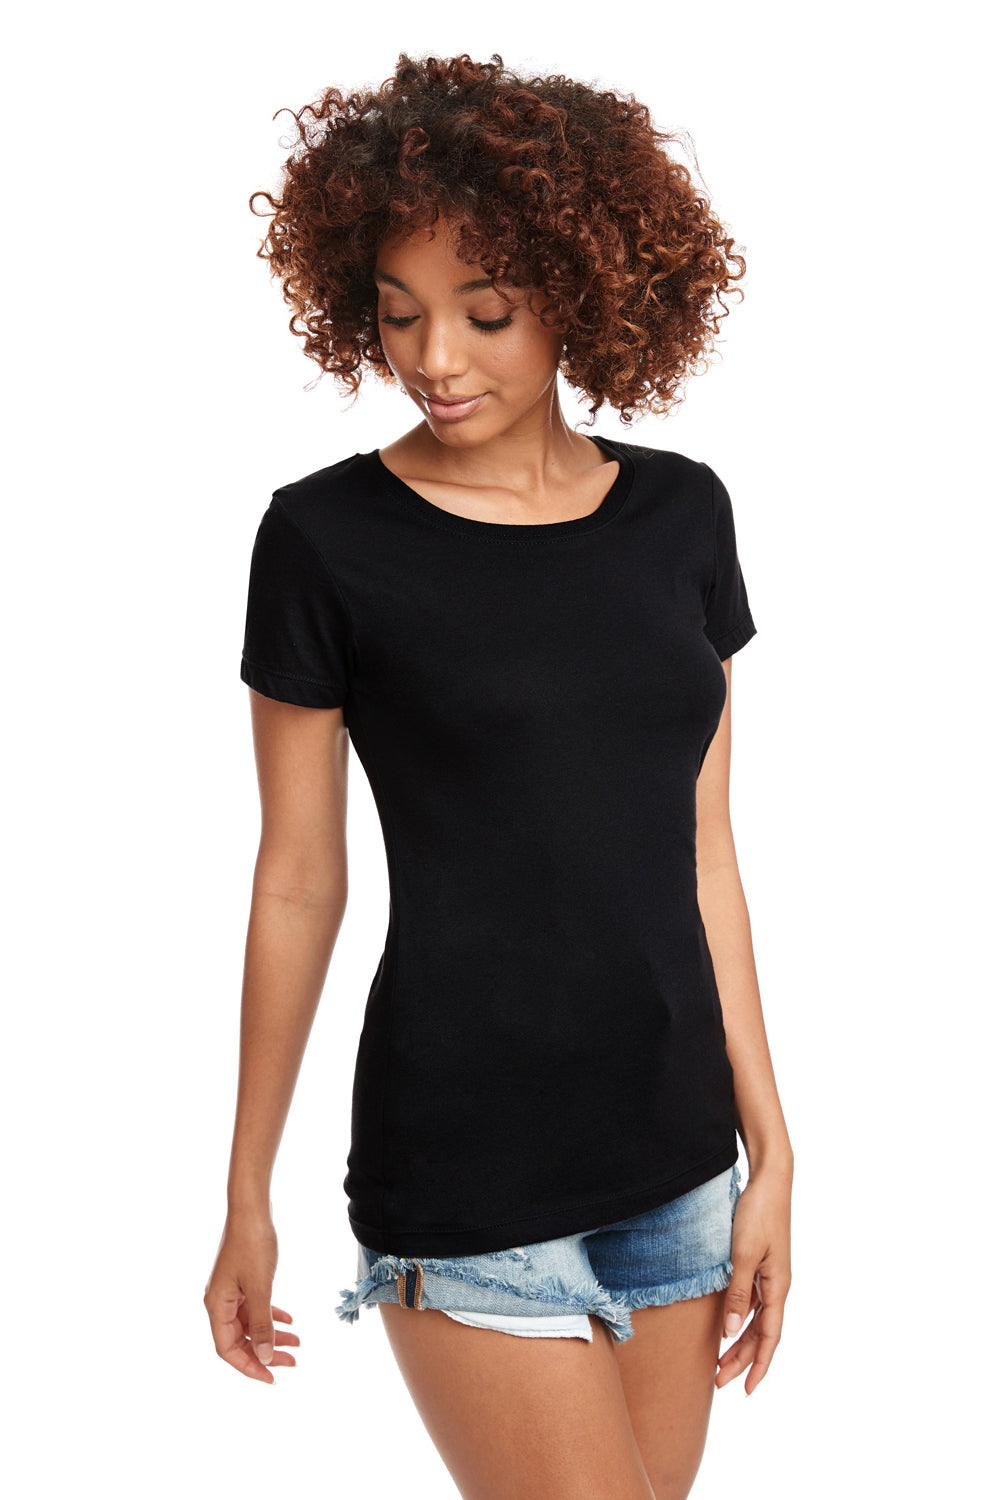 Next Level N1510 Womens Ideal Jersey Short Sleeve Crewneck T-Shirt Black Side